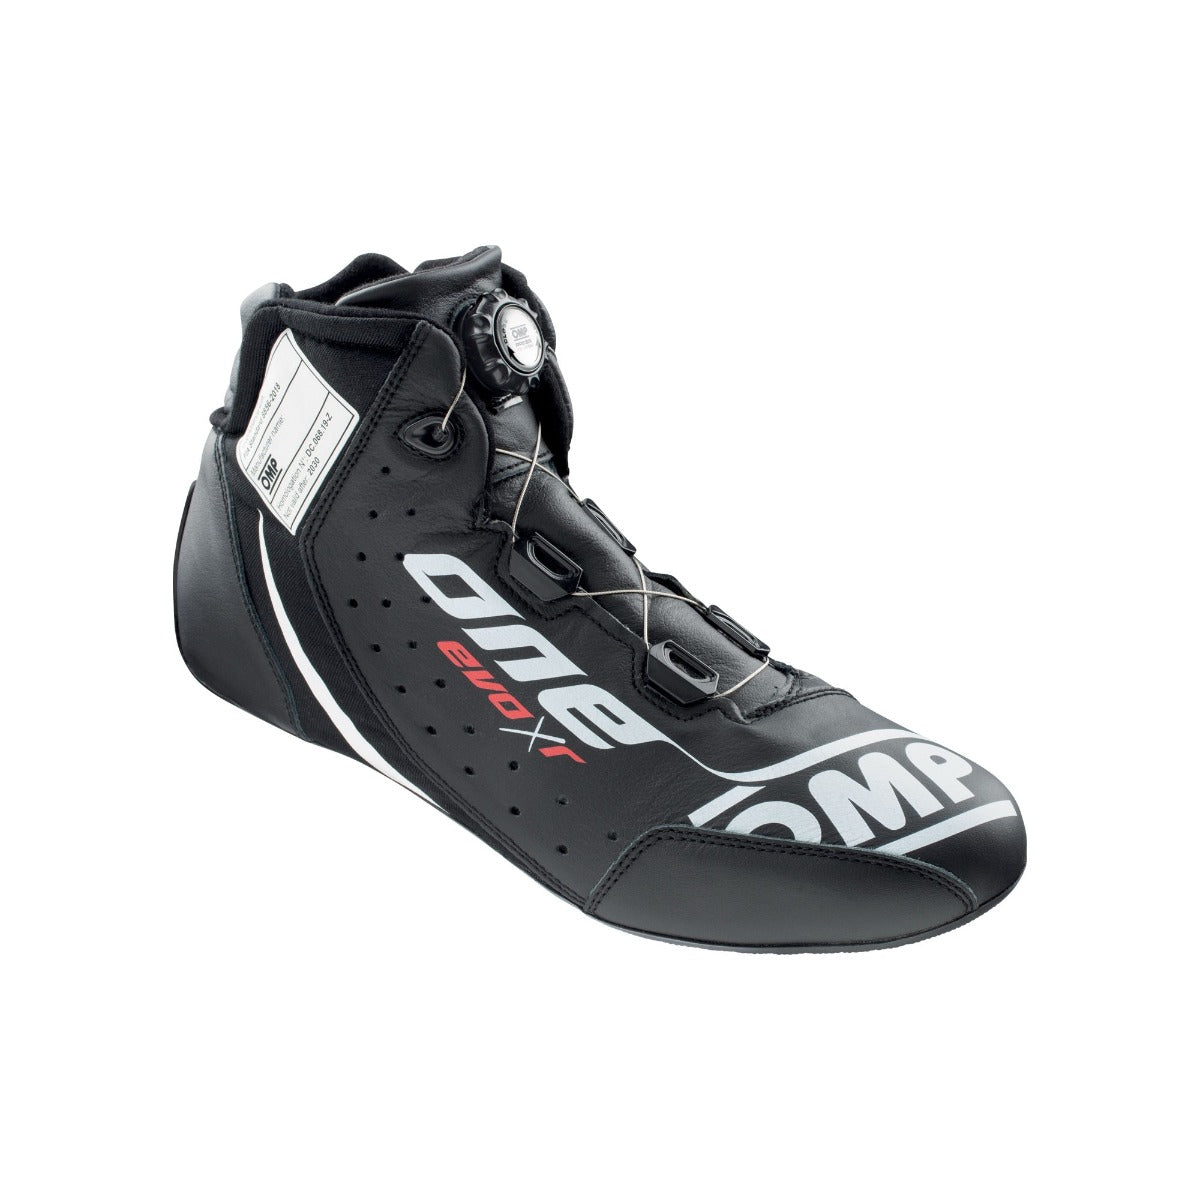 OMP One Evo X R Nomex Race Shoe in black